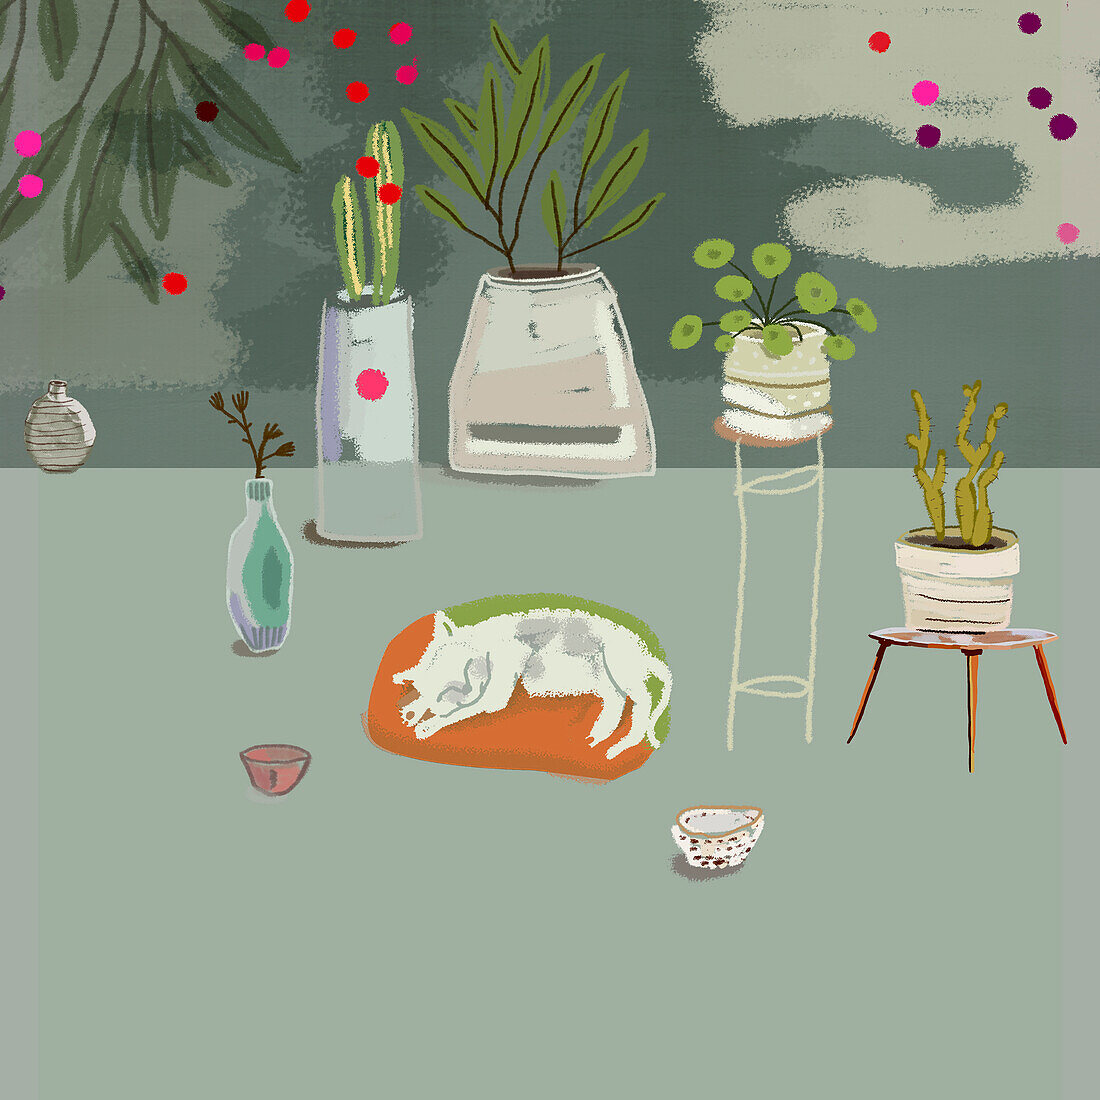 Sleeping house cat, illustration